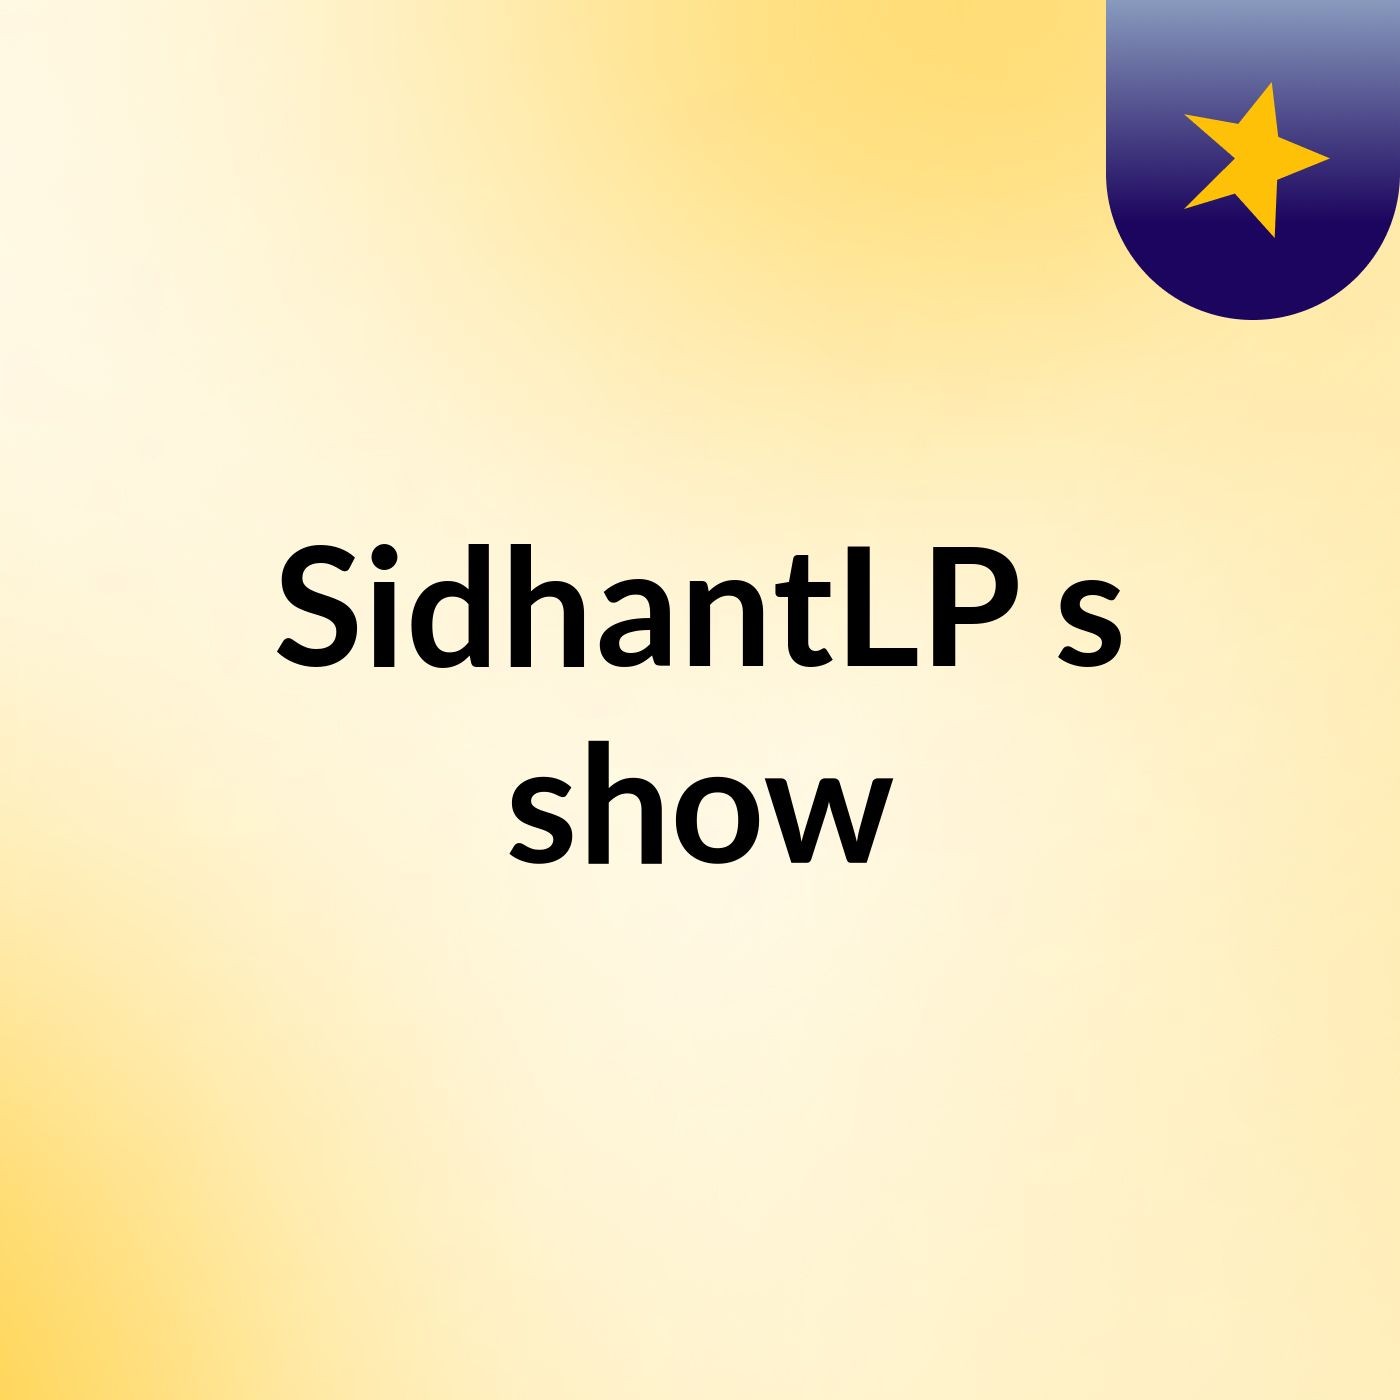 SidhantLP's show